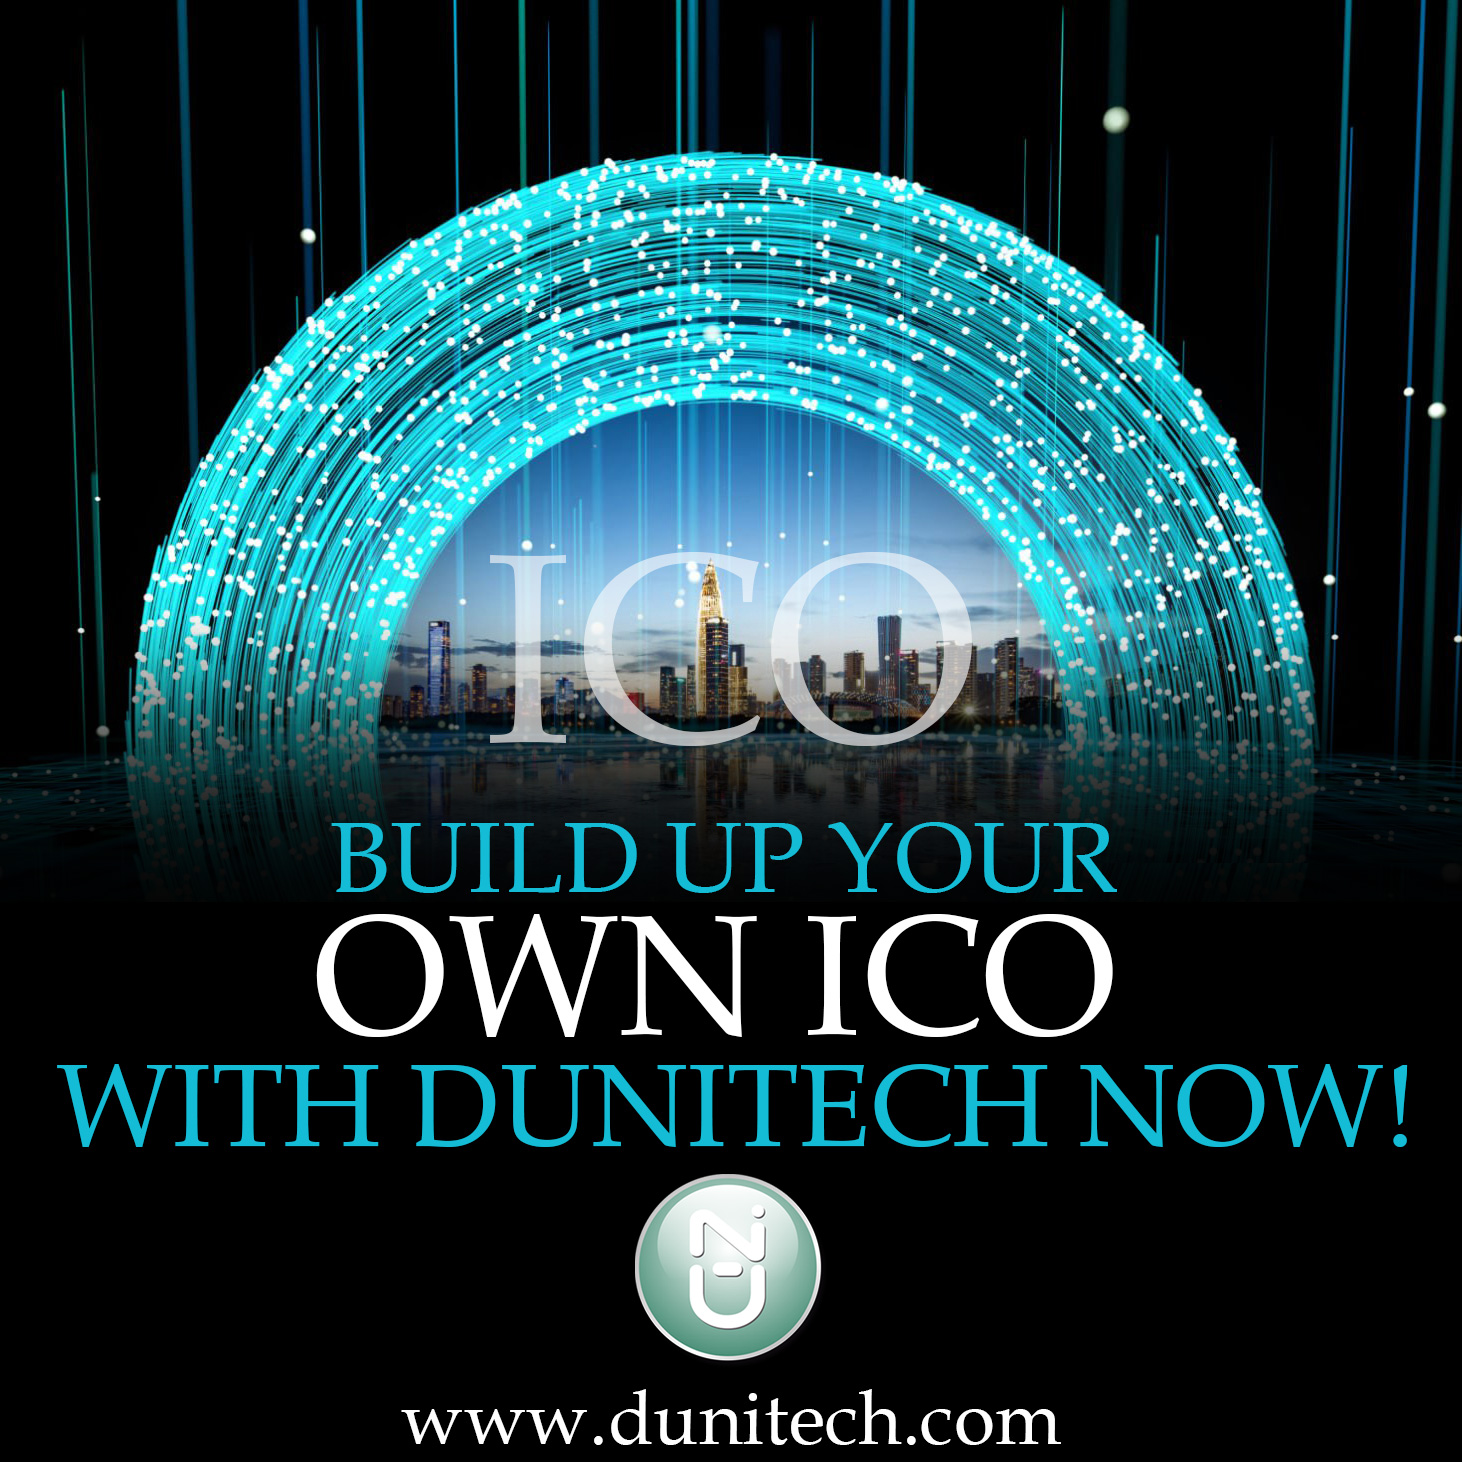 ICO Development Company for Enterprises and Startups - Dunitech